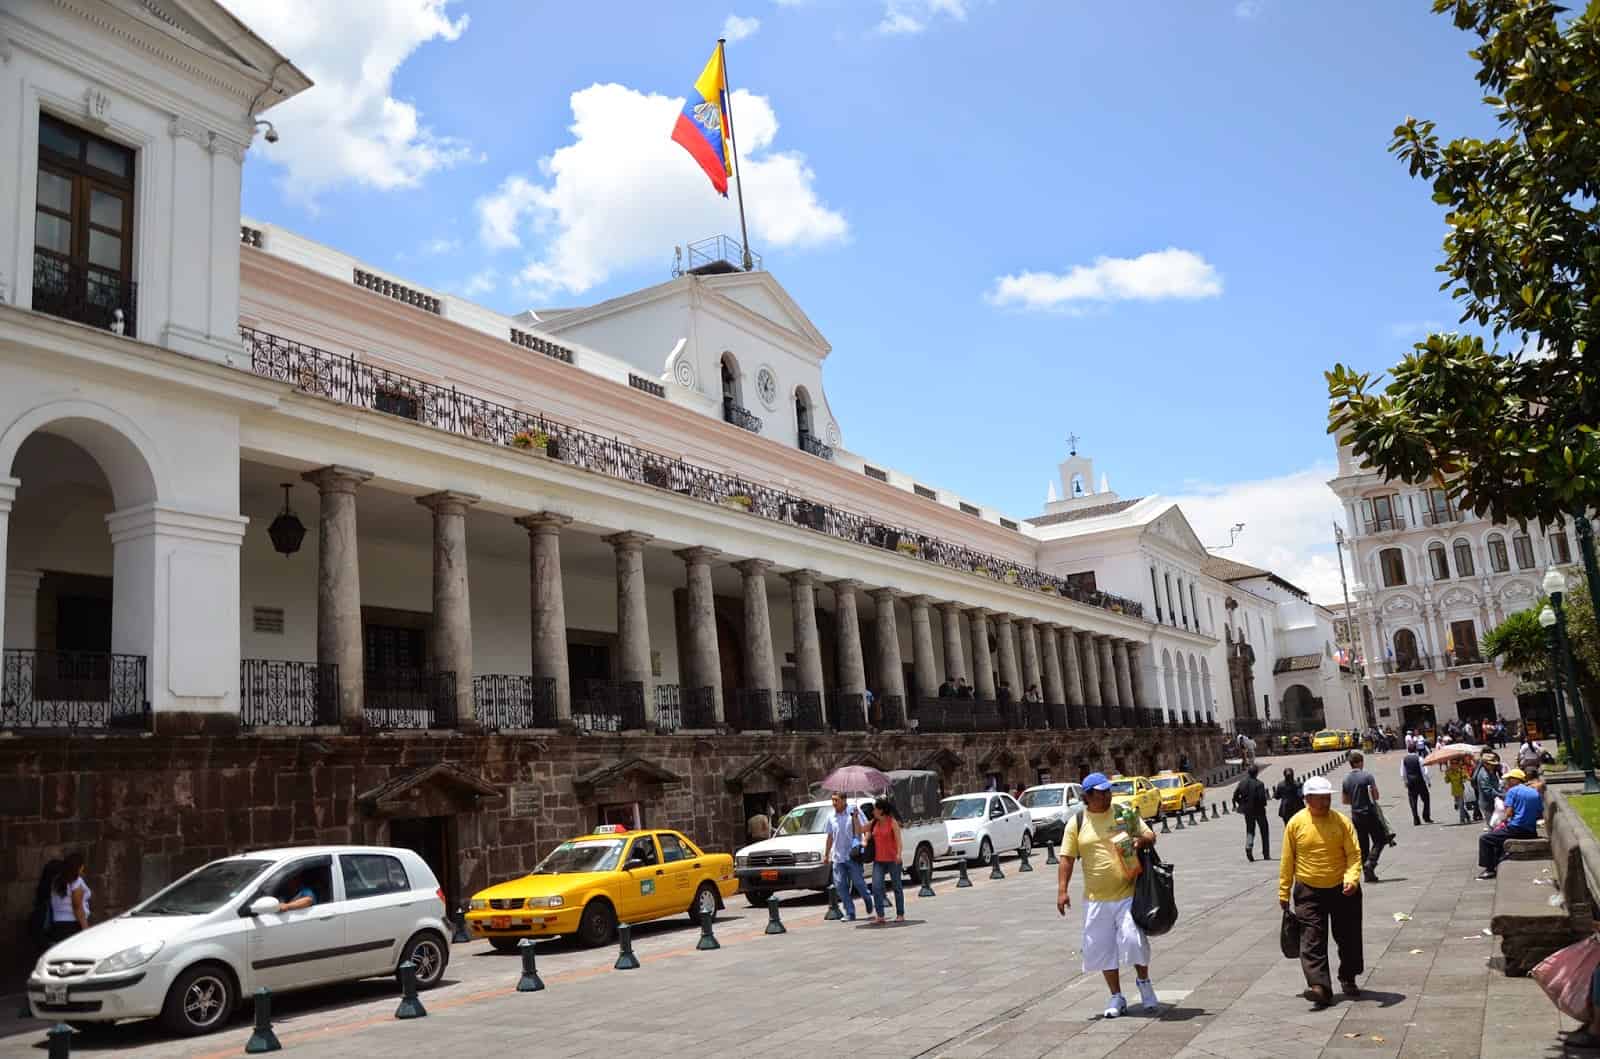 Palacio de Carondelet on Plaza Grande in Quito, Ecuador